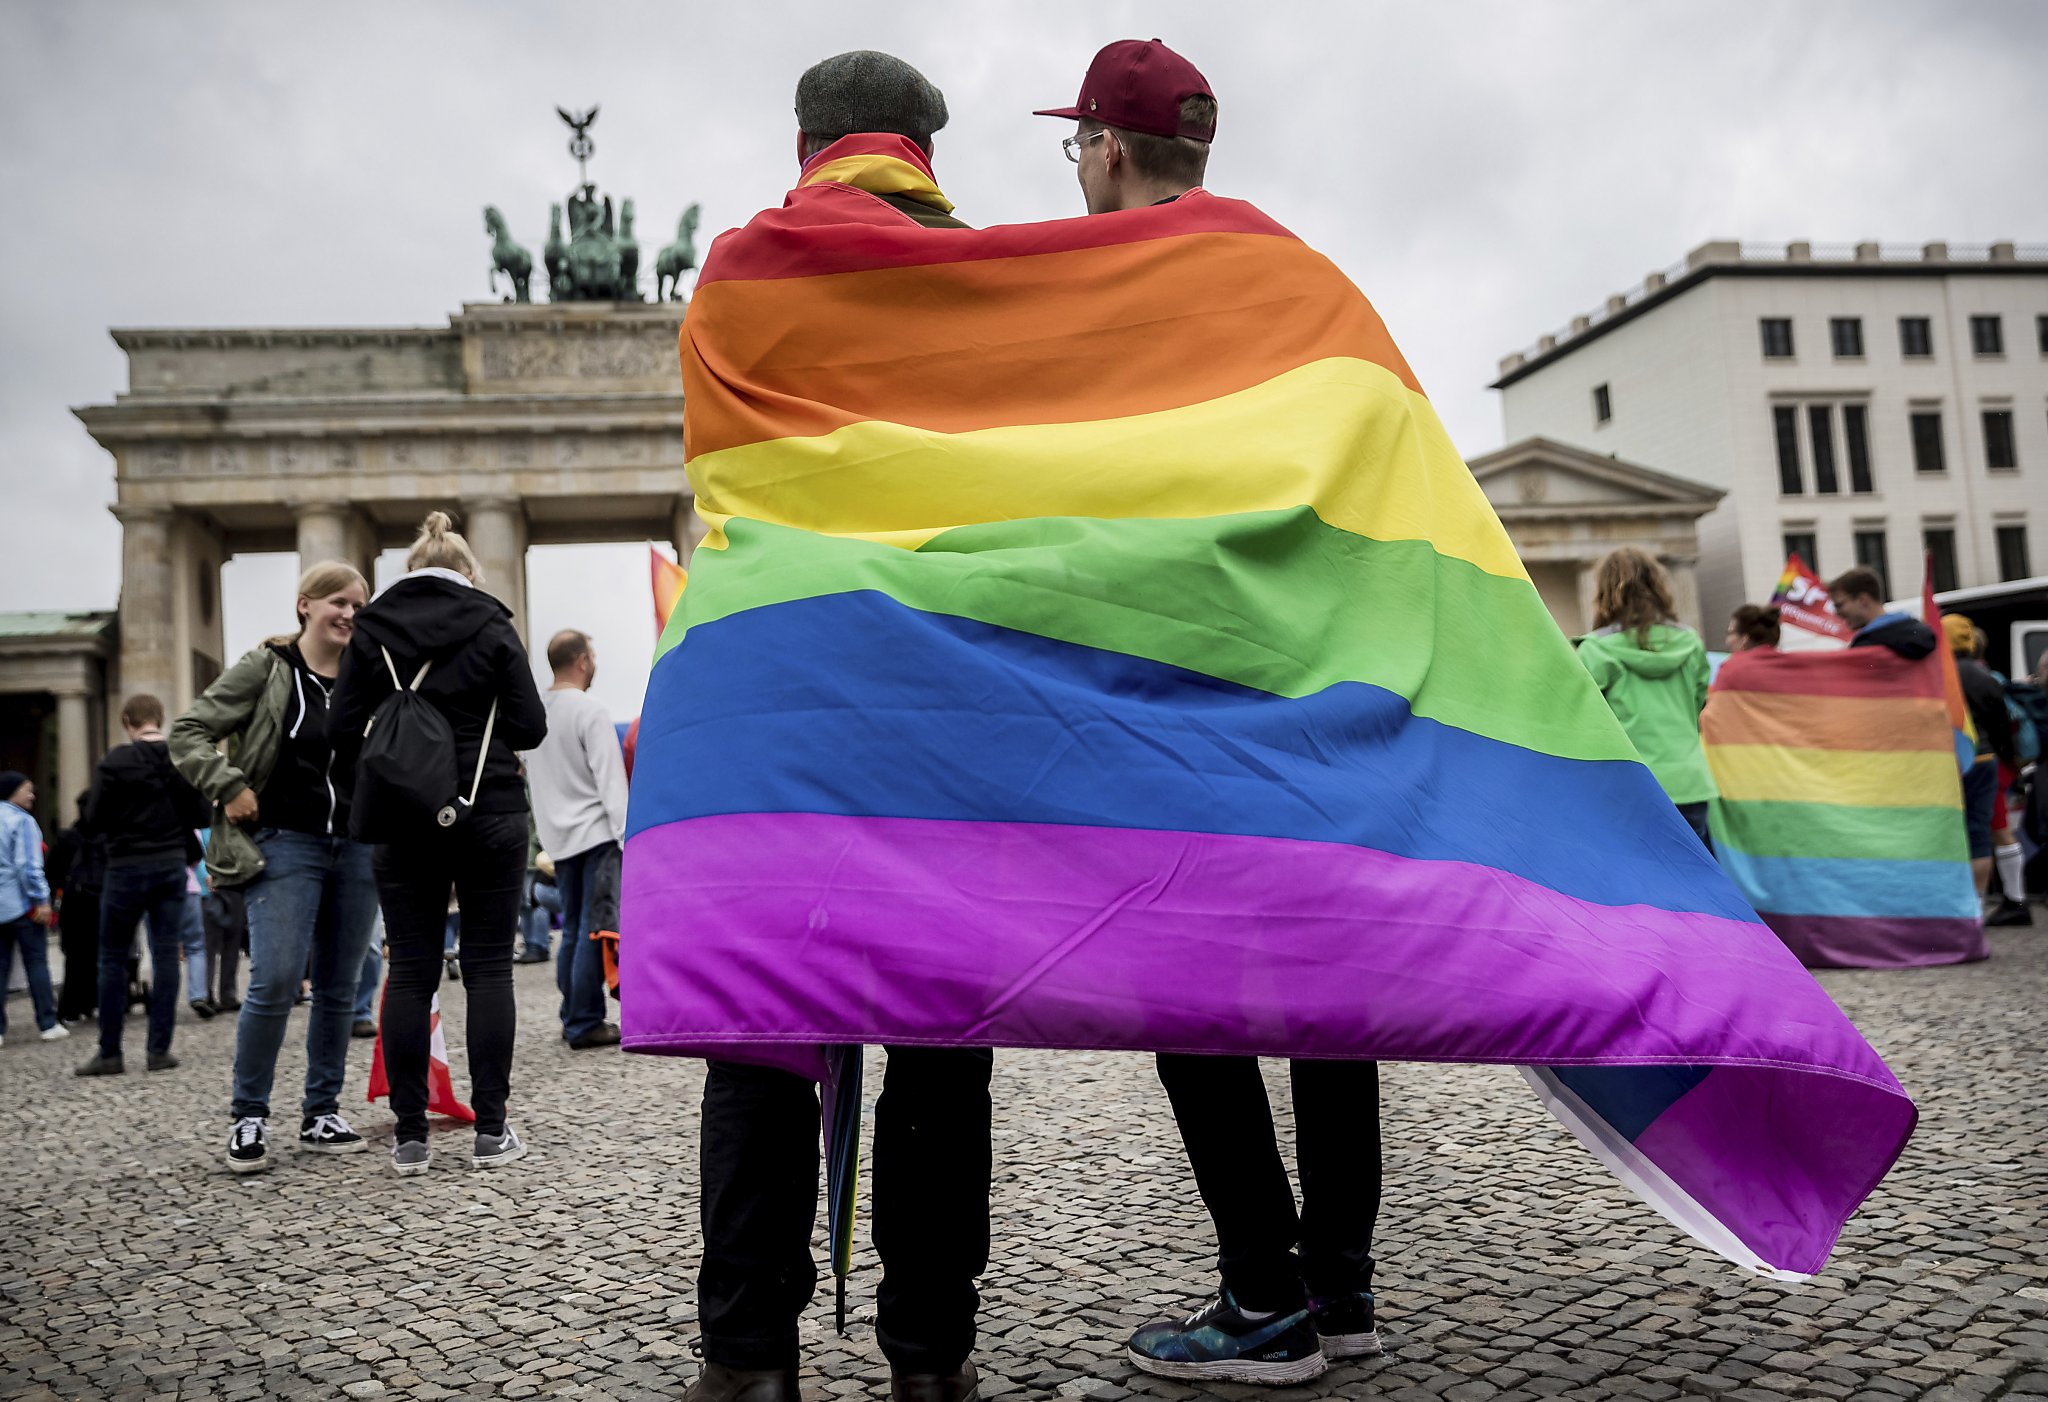 Catholics views of gay marriage around the world